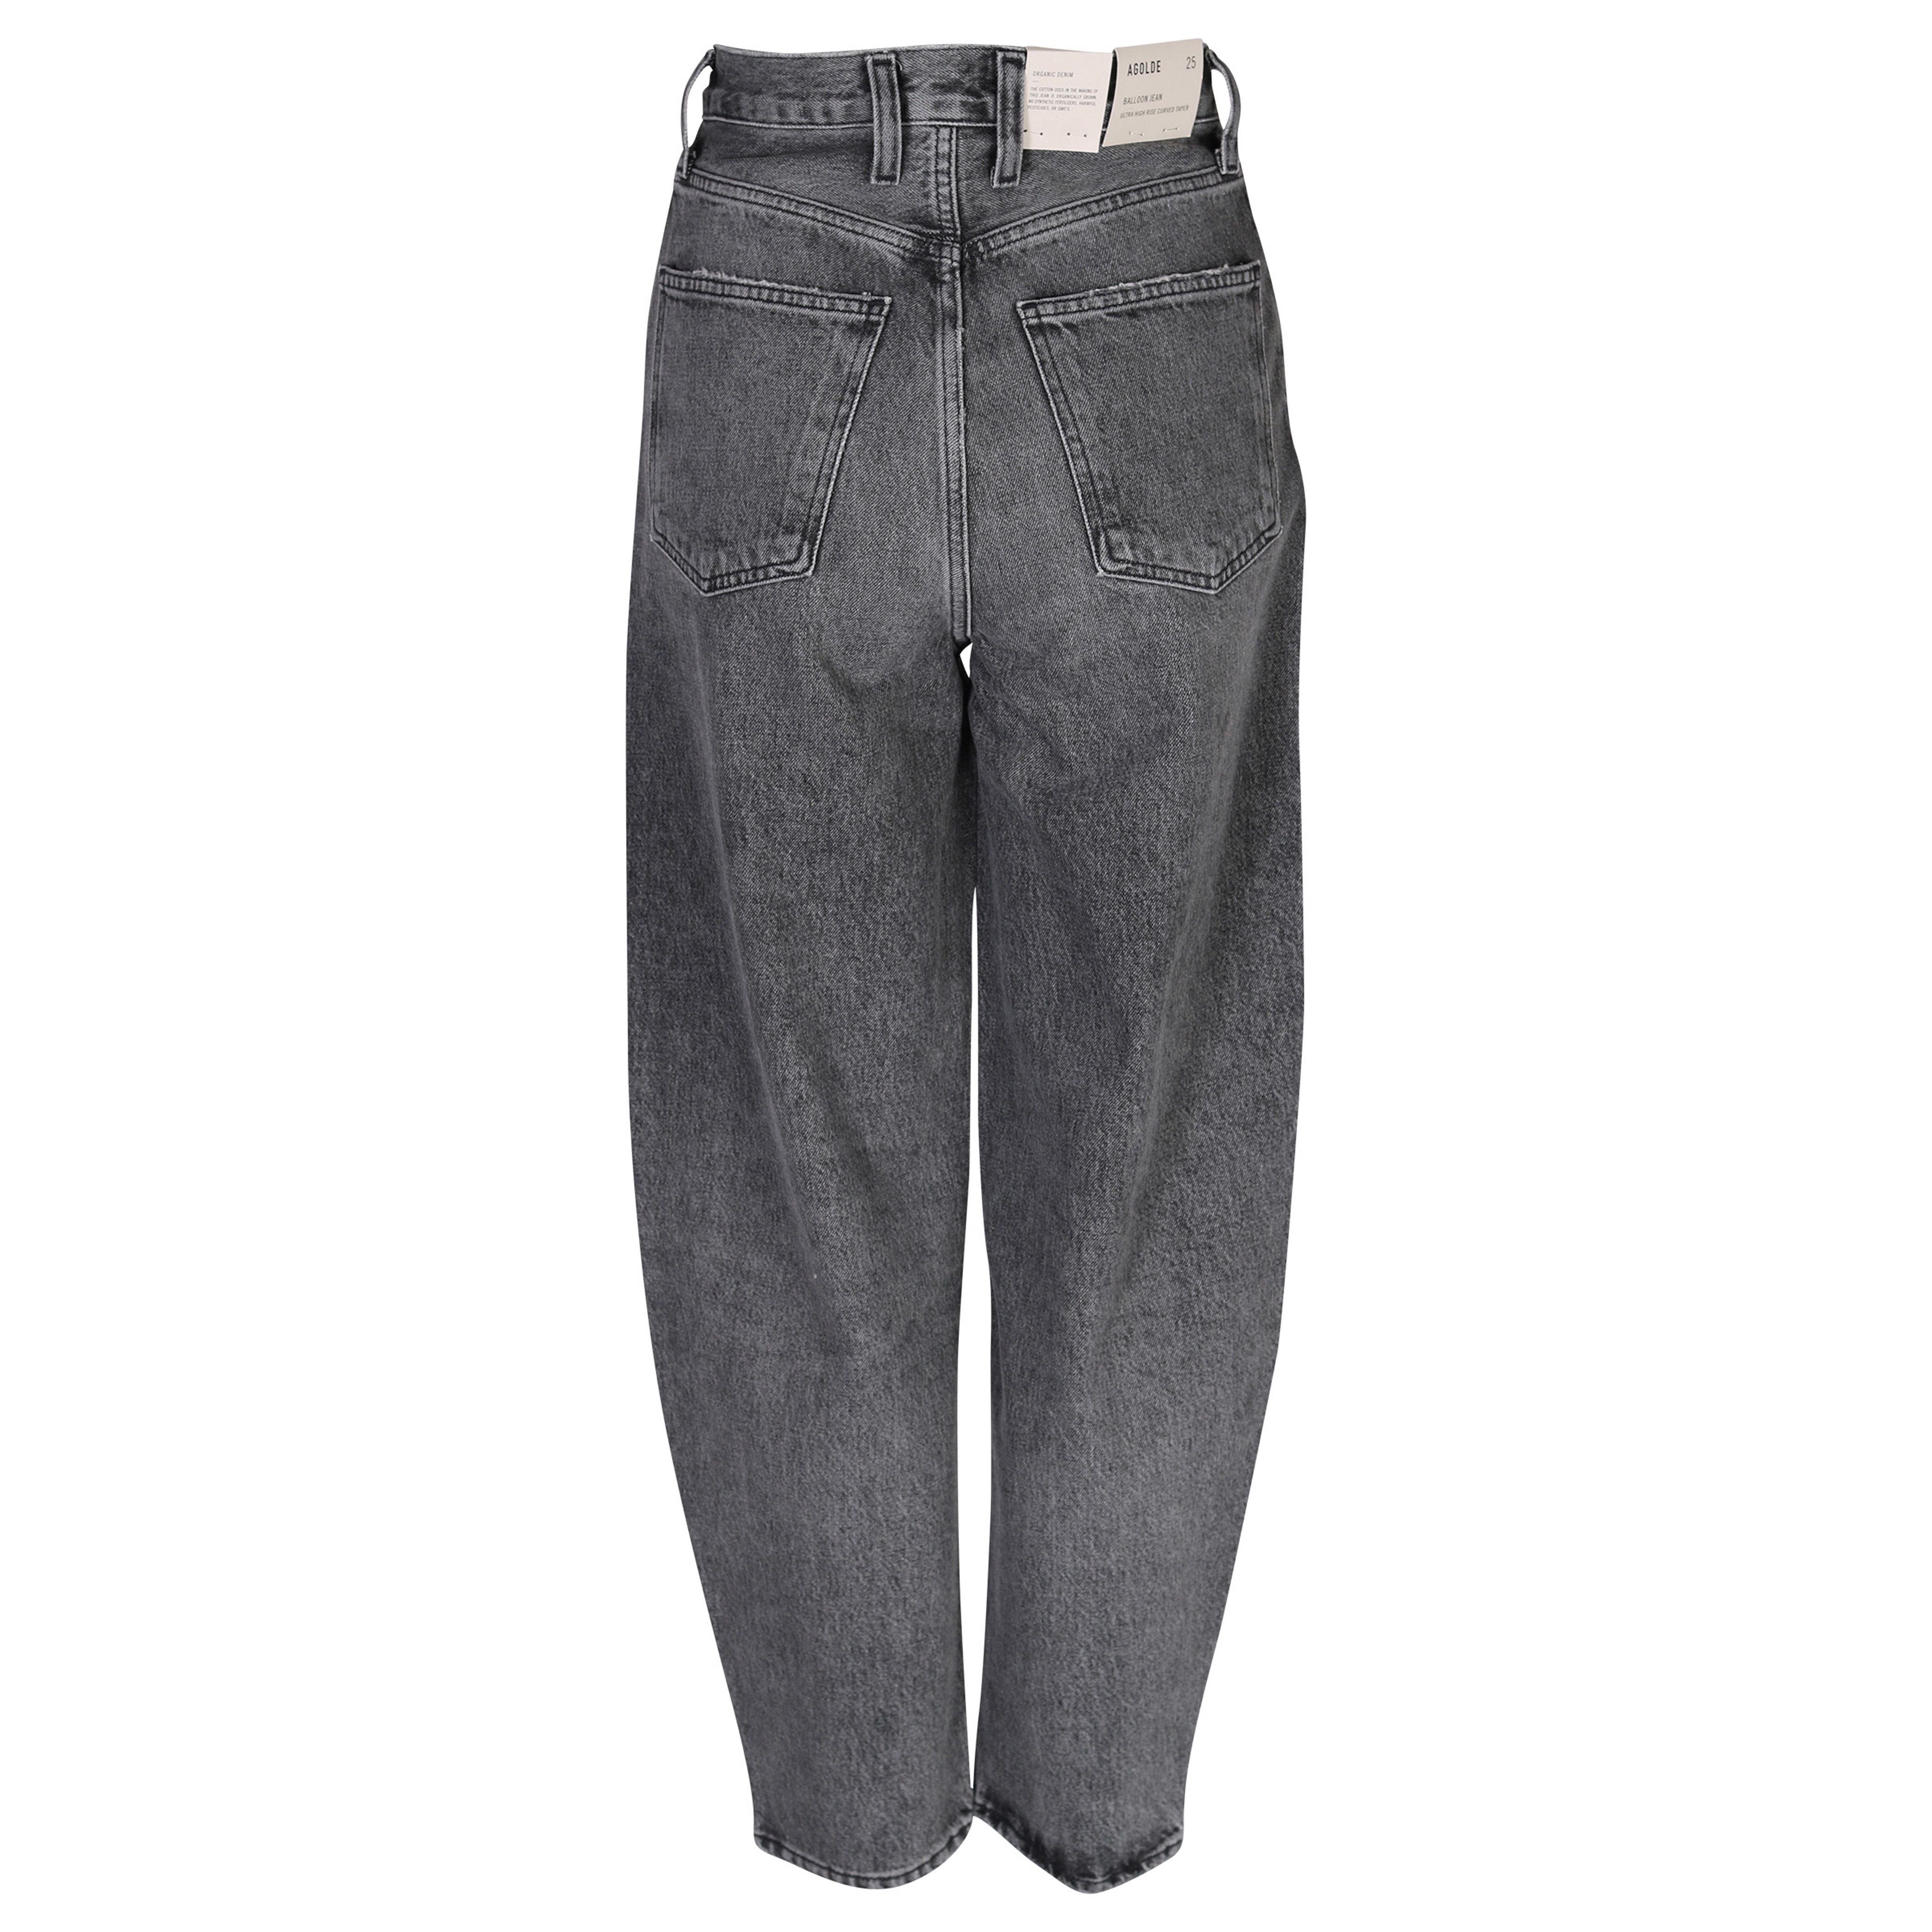 Agolde Jeans Ballon Jean in Vintage Grey  29